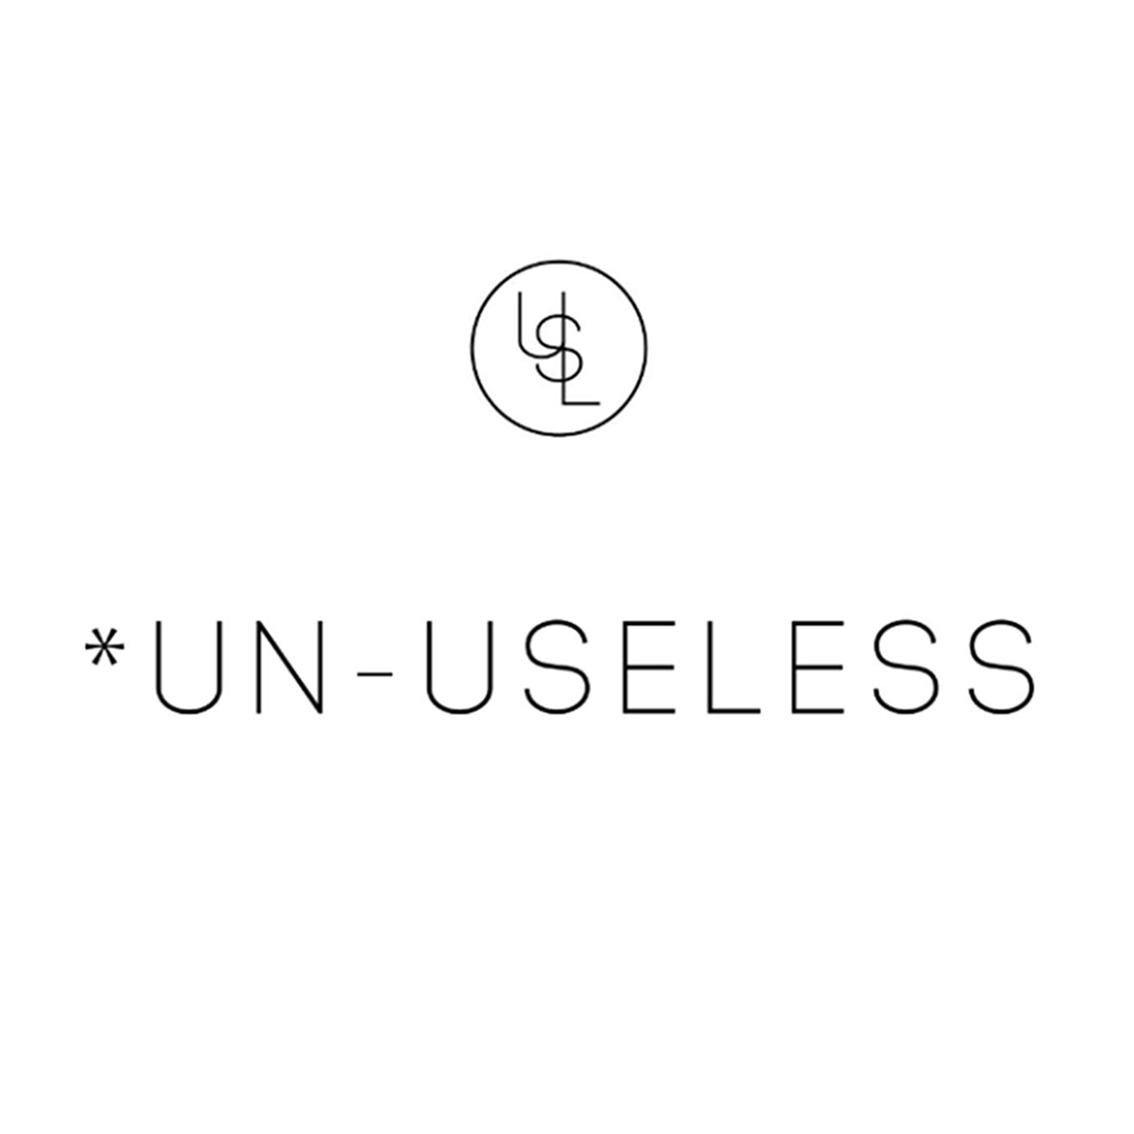 UN-USELESS